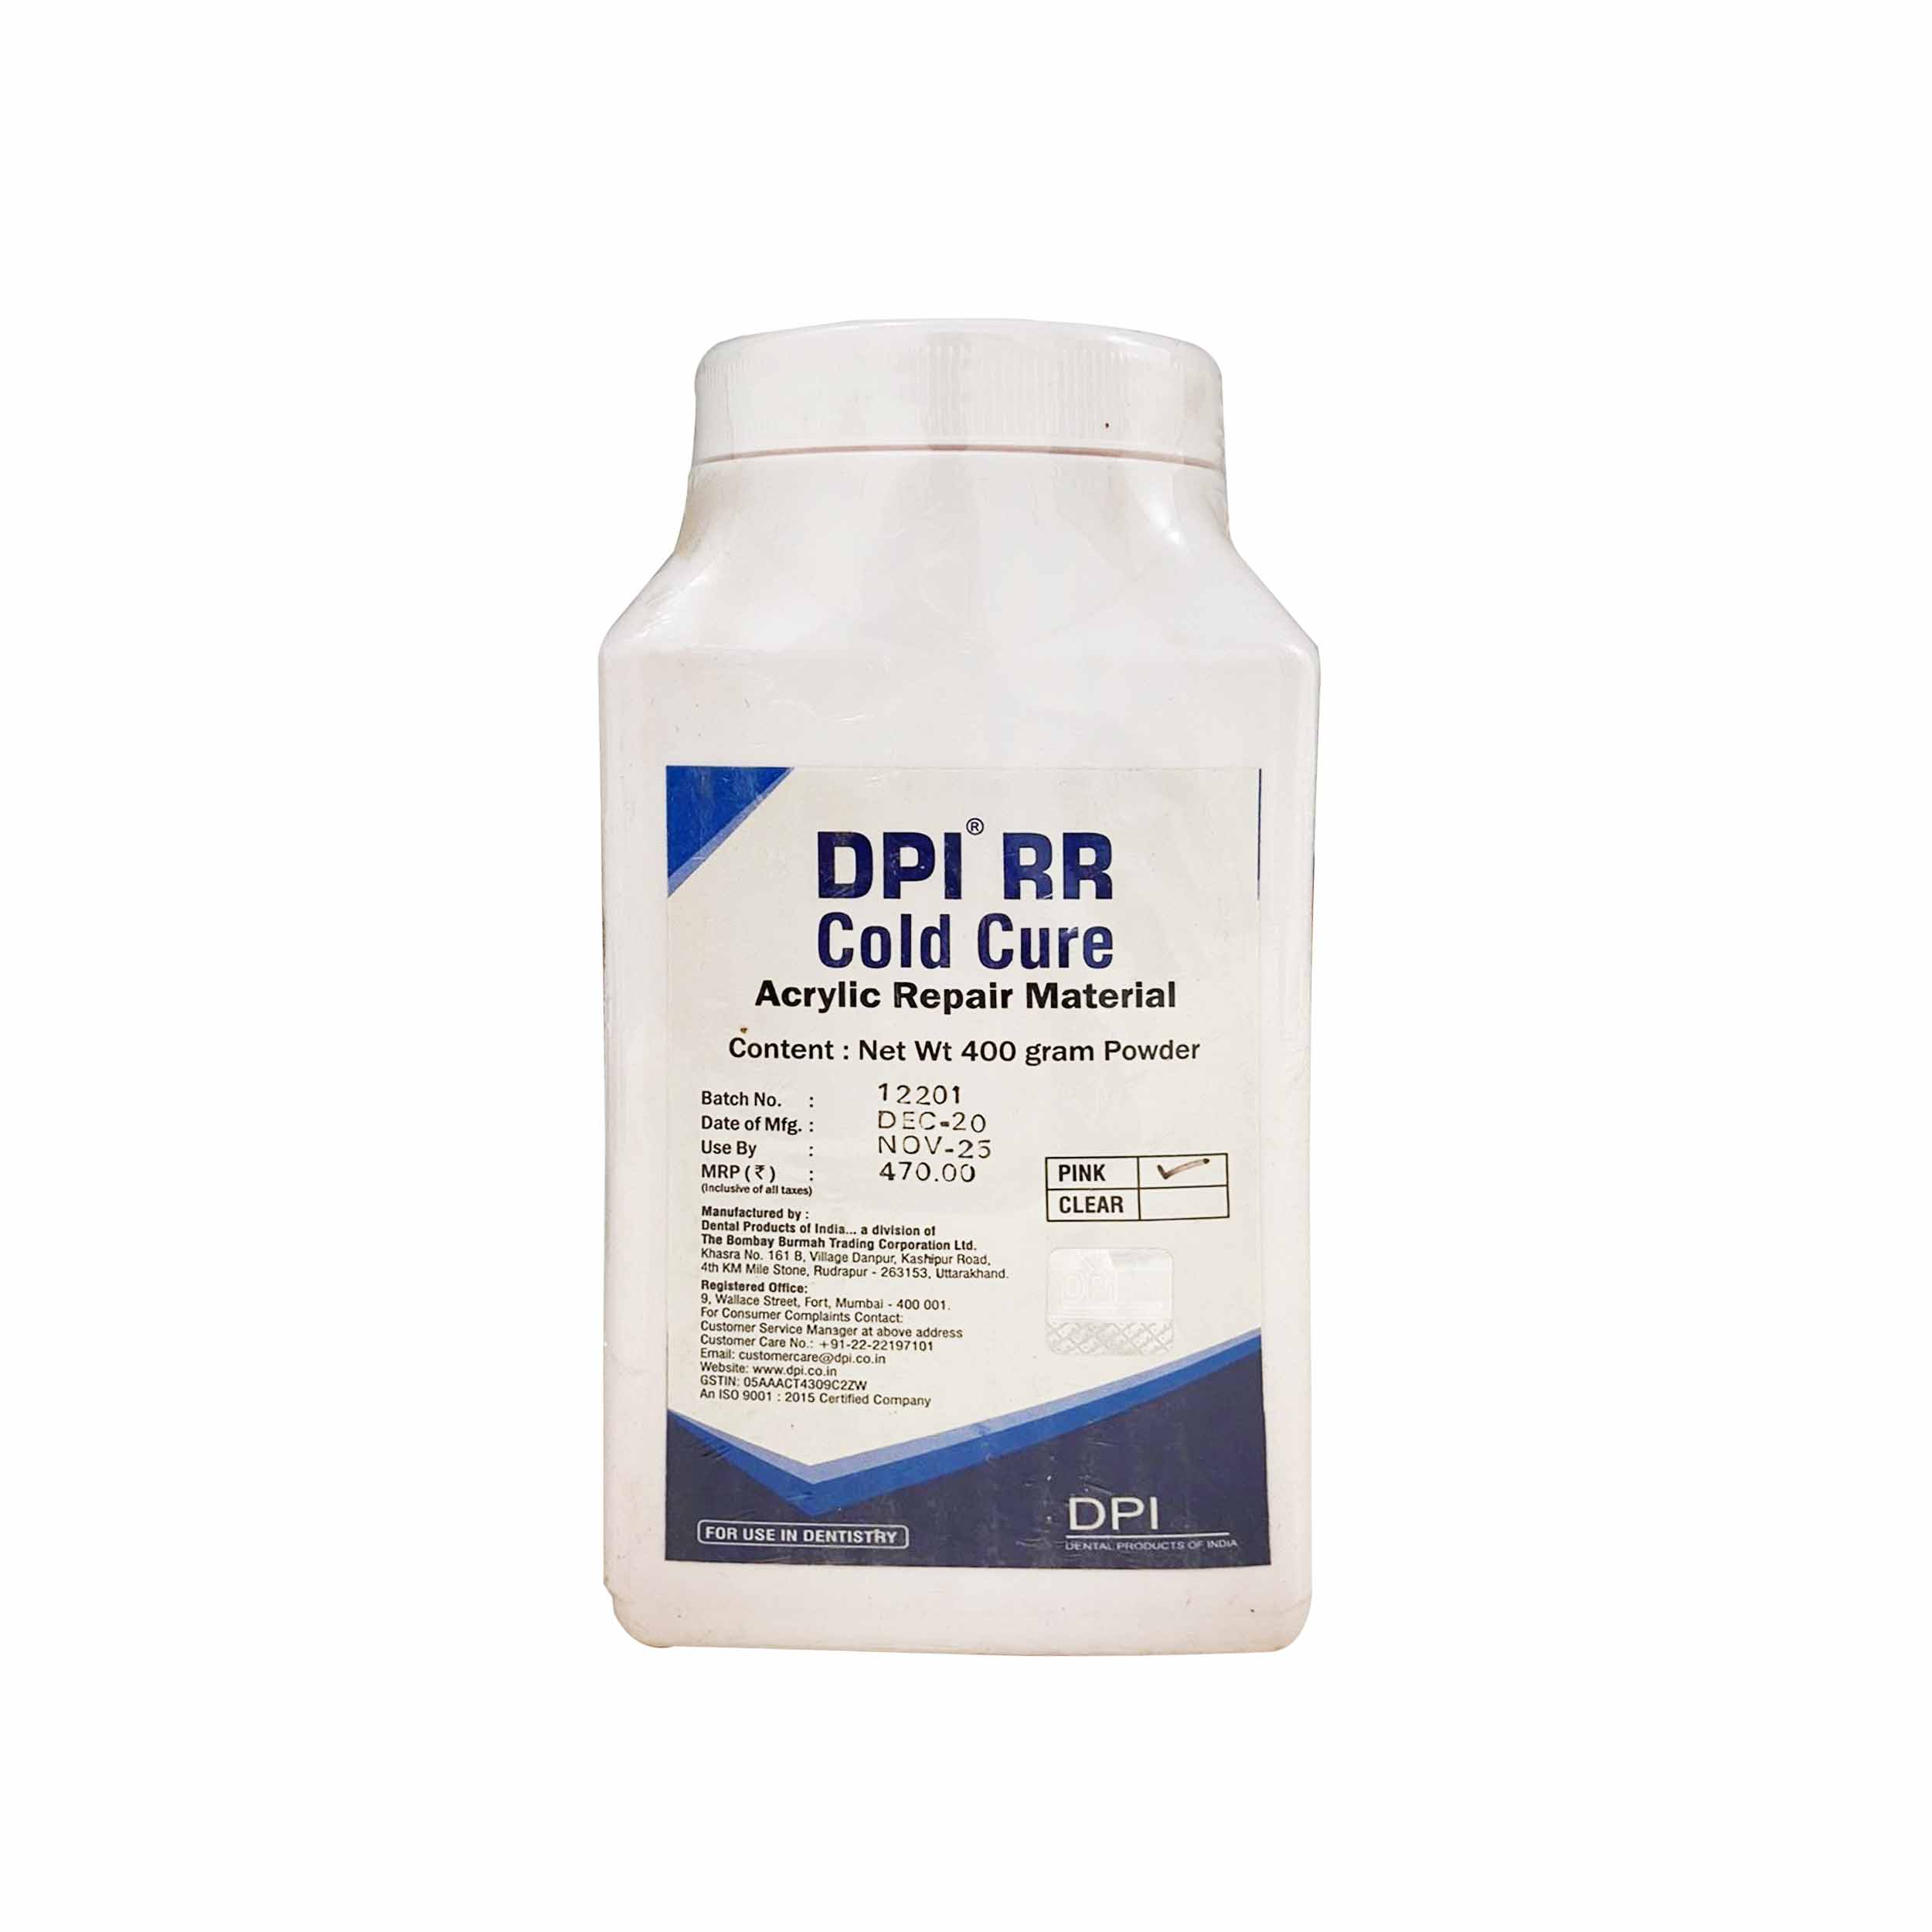 DPI RR Cold Cure Powder 400gm